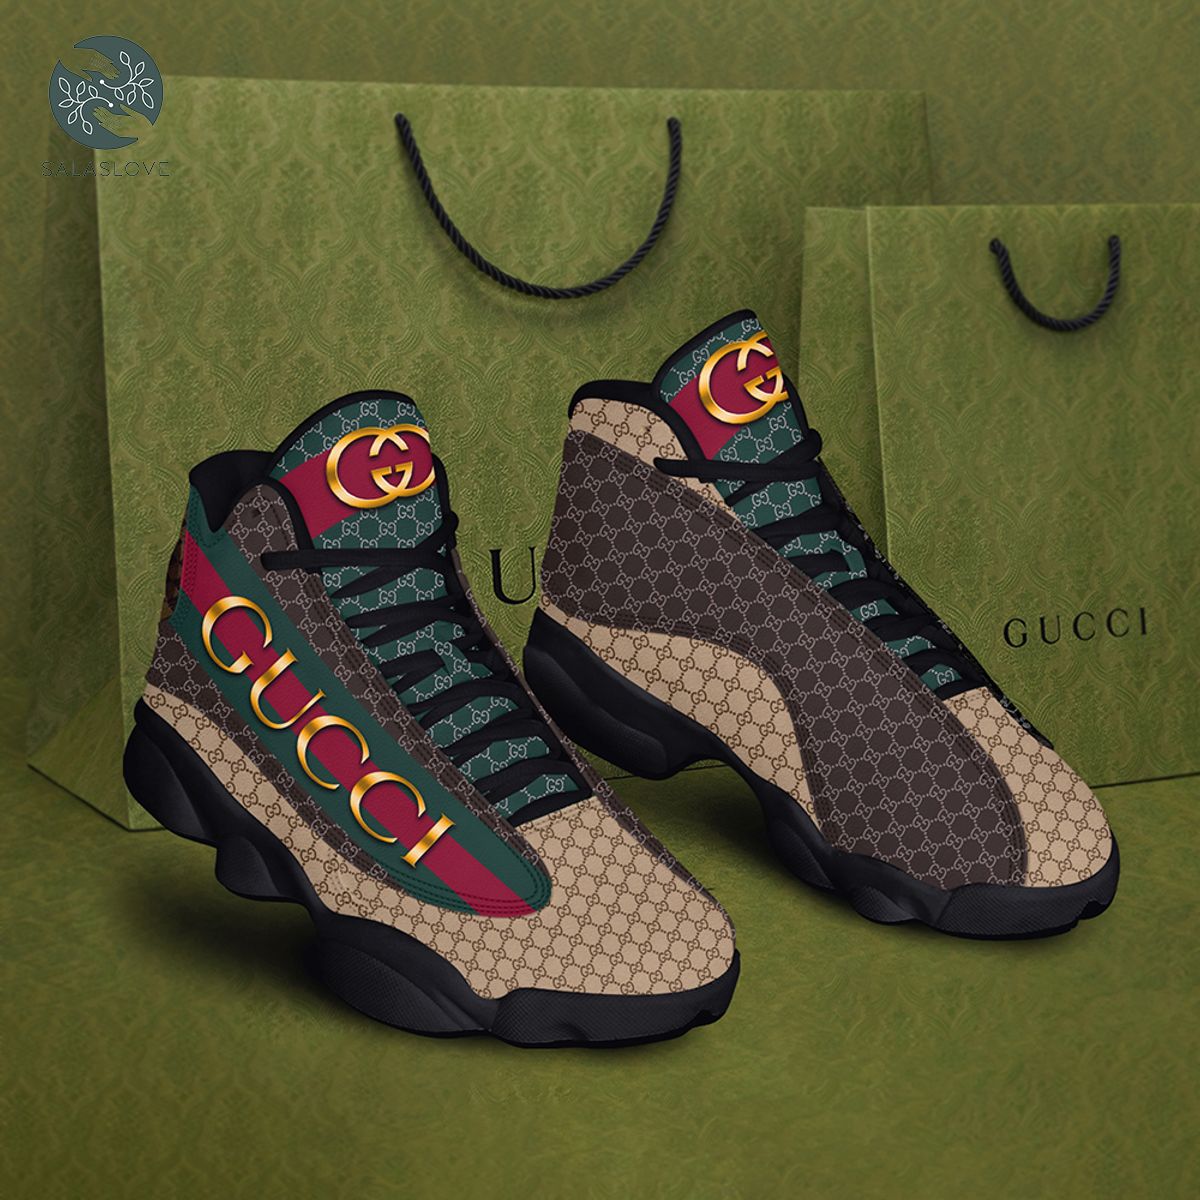 Luxury Gucci Air Jordan 13 Sneakers Shoes For Men Women